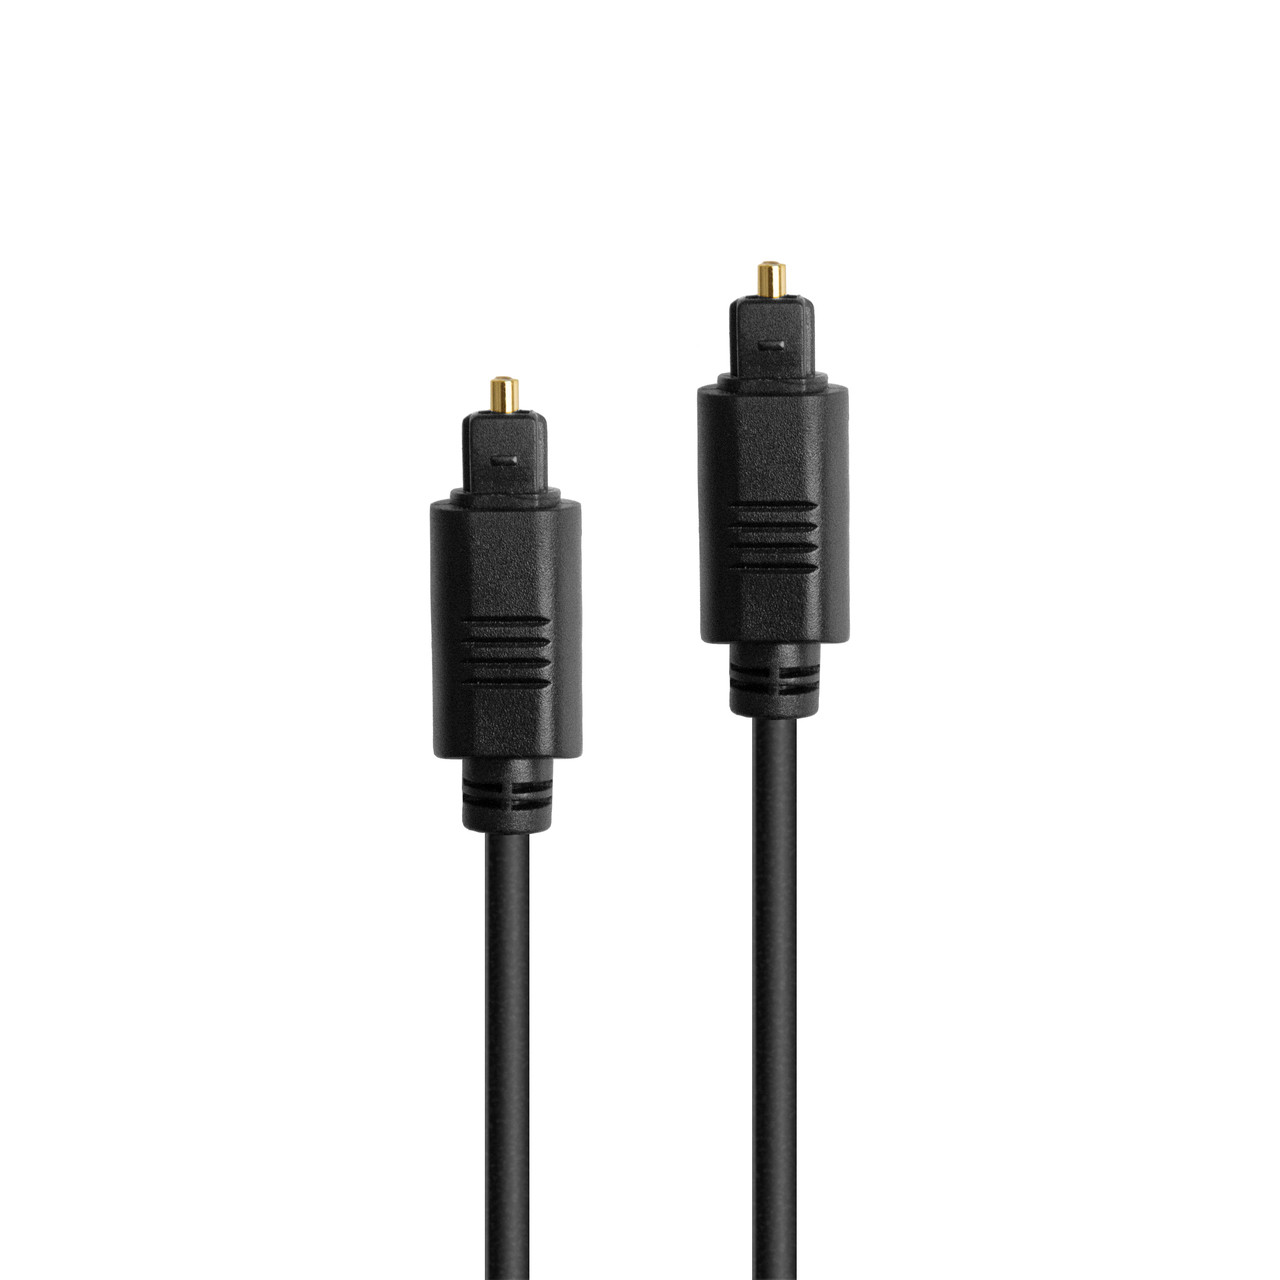 TOSLINK Digital S/PDIF Audio Cable MEE audio